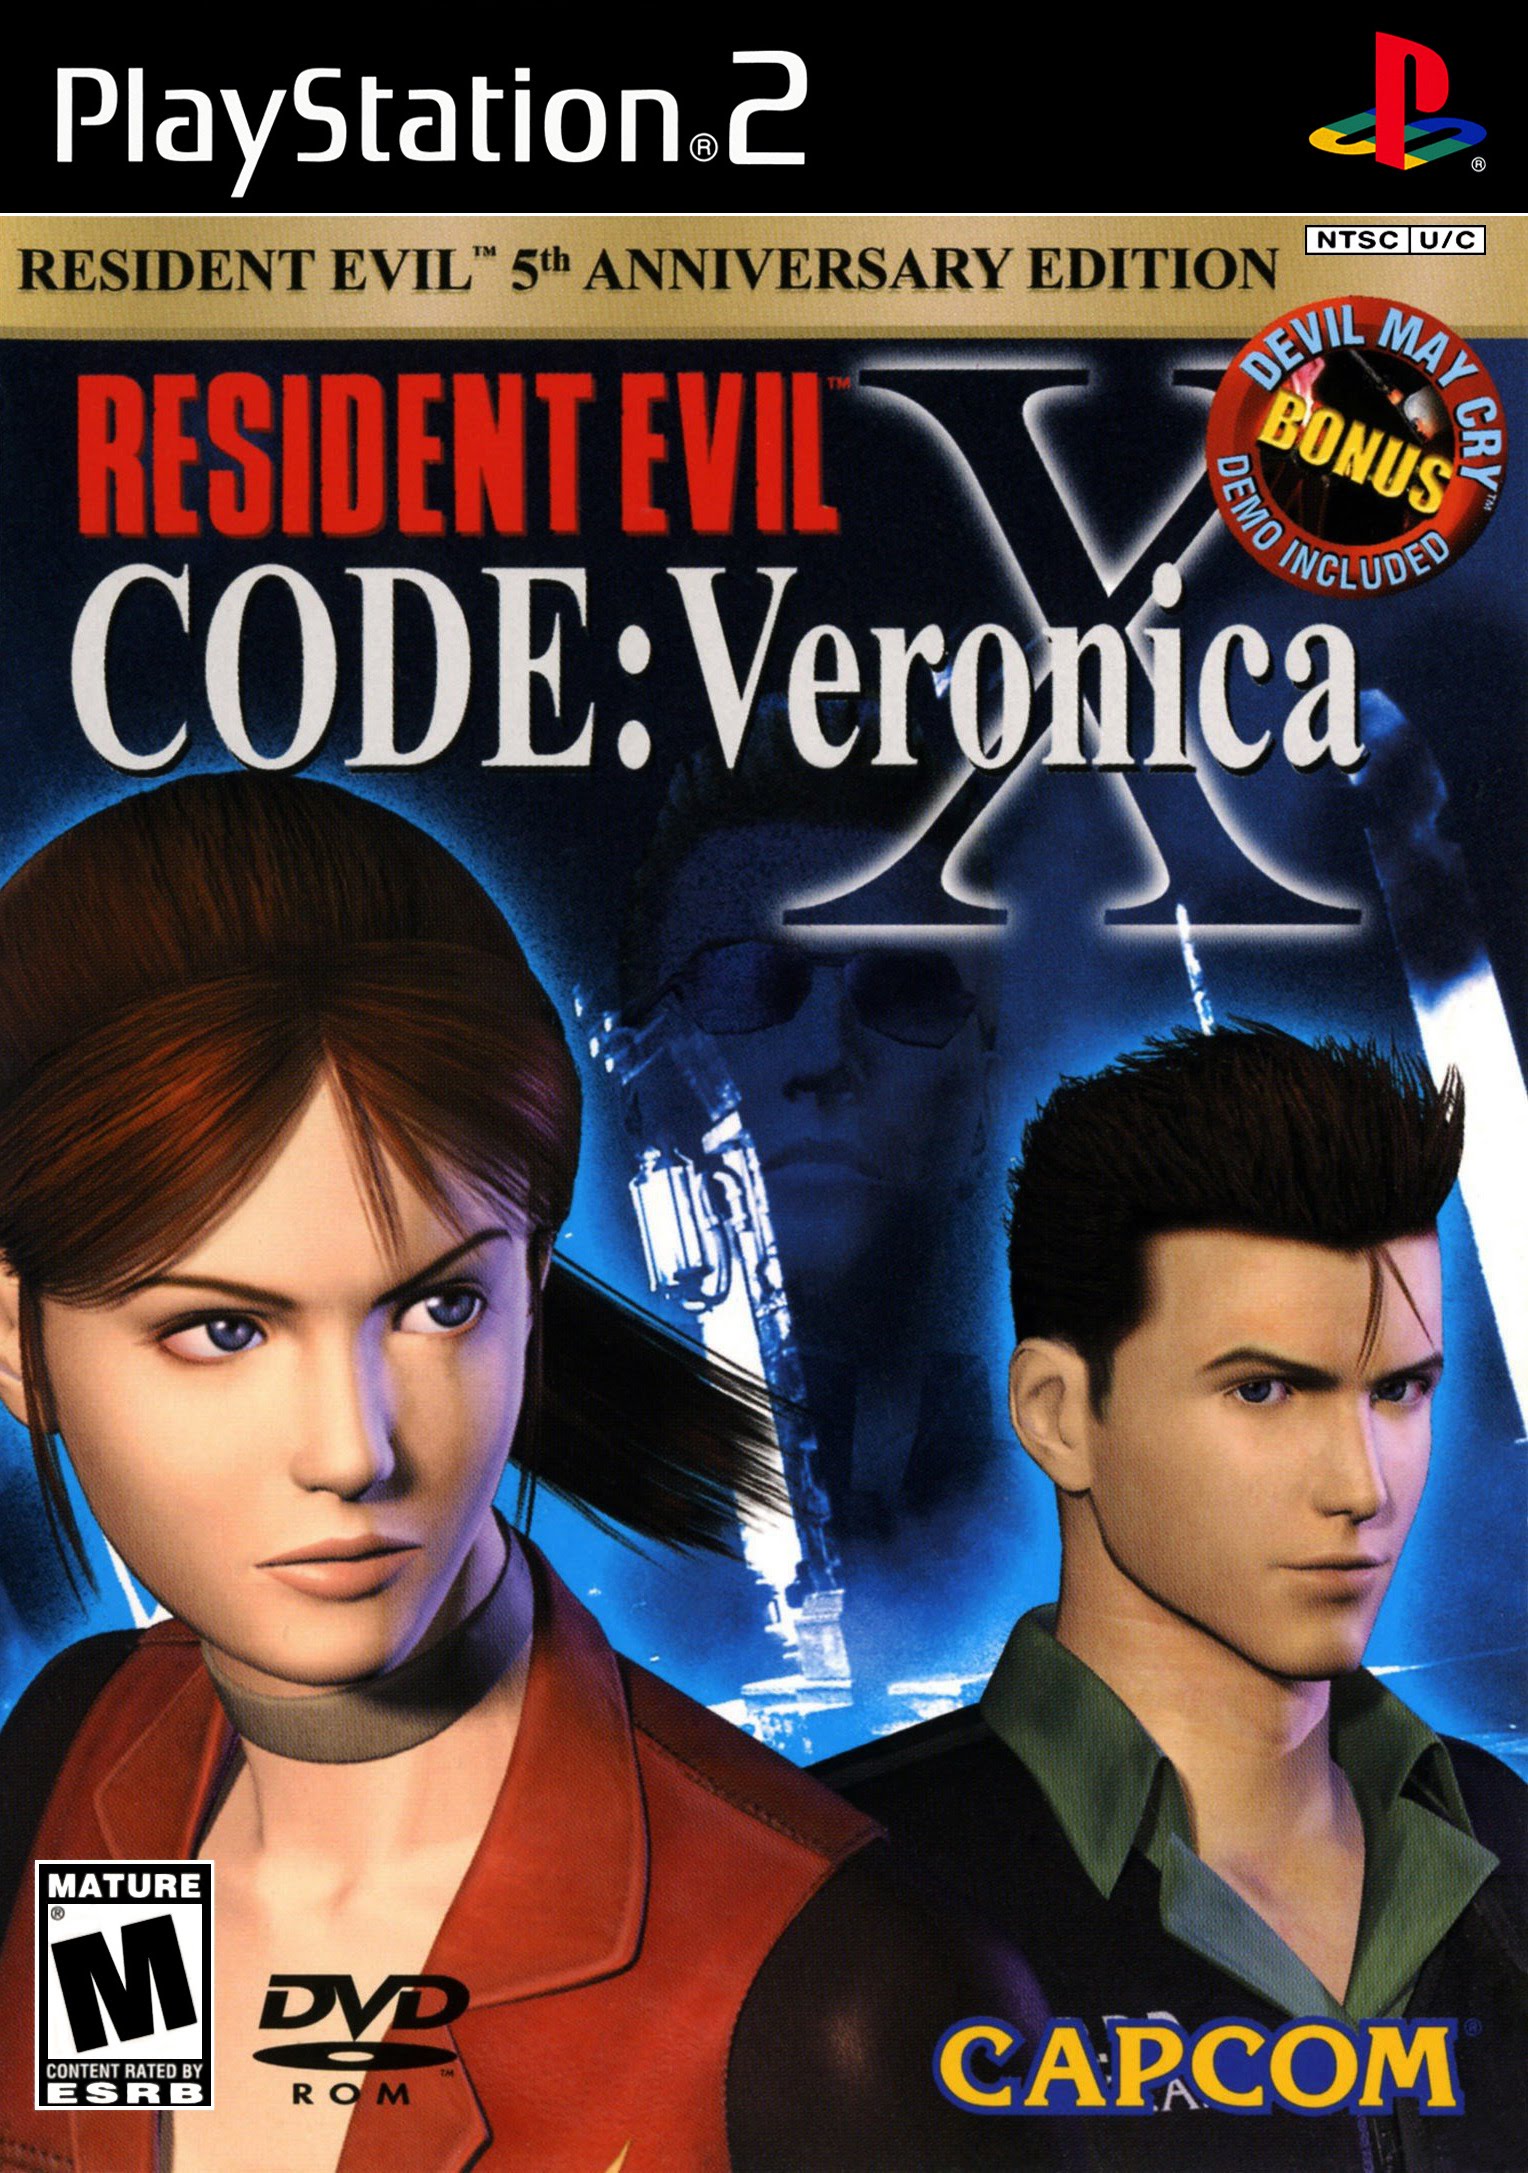  Translations - Resident Evil Code: Veronica X